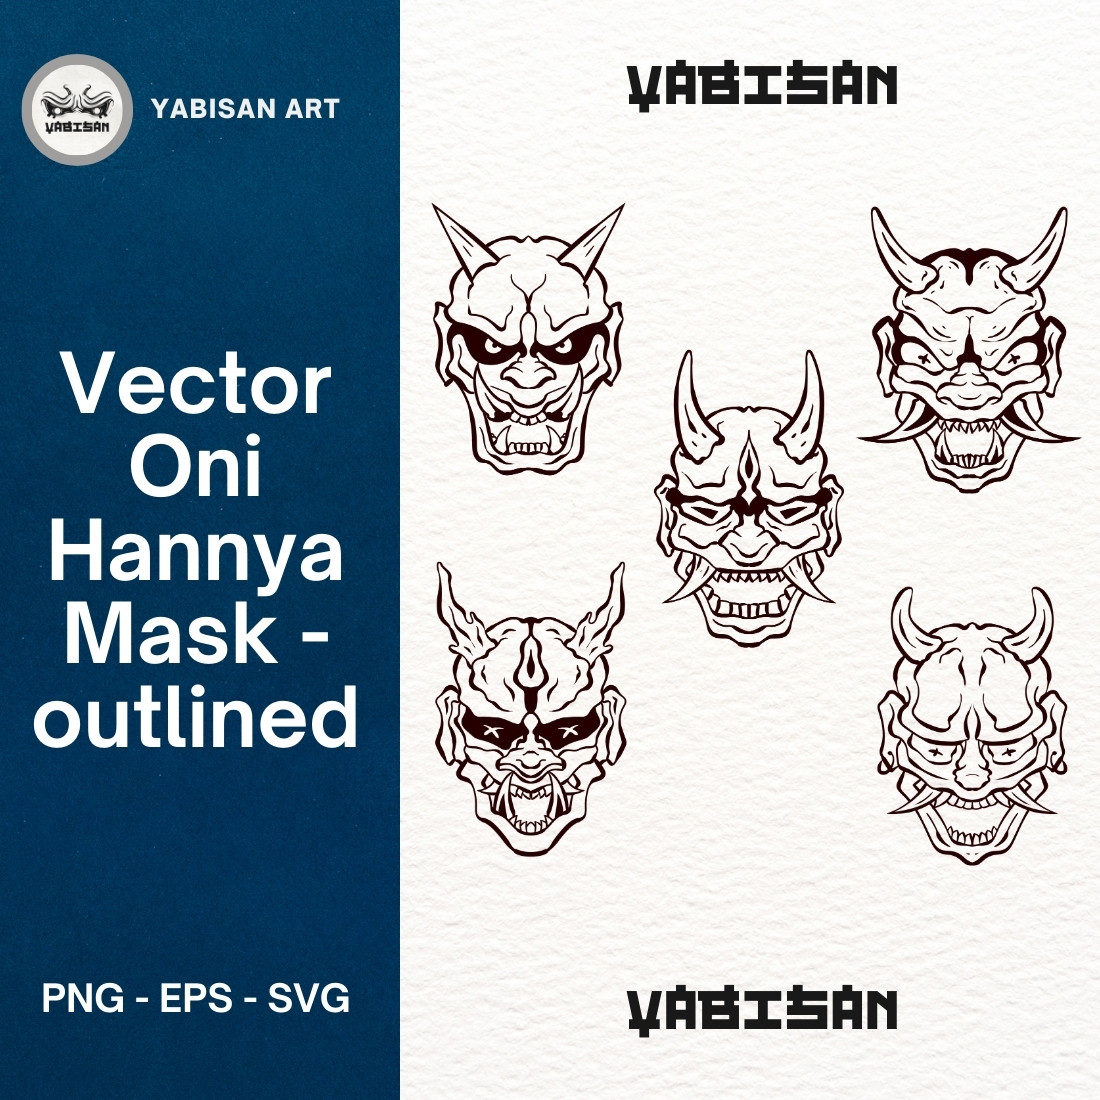 Oni Hannya Mask Art set – Outlined preview image.